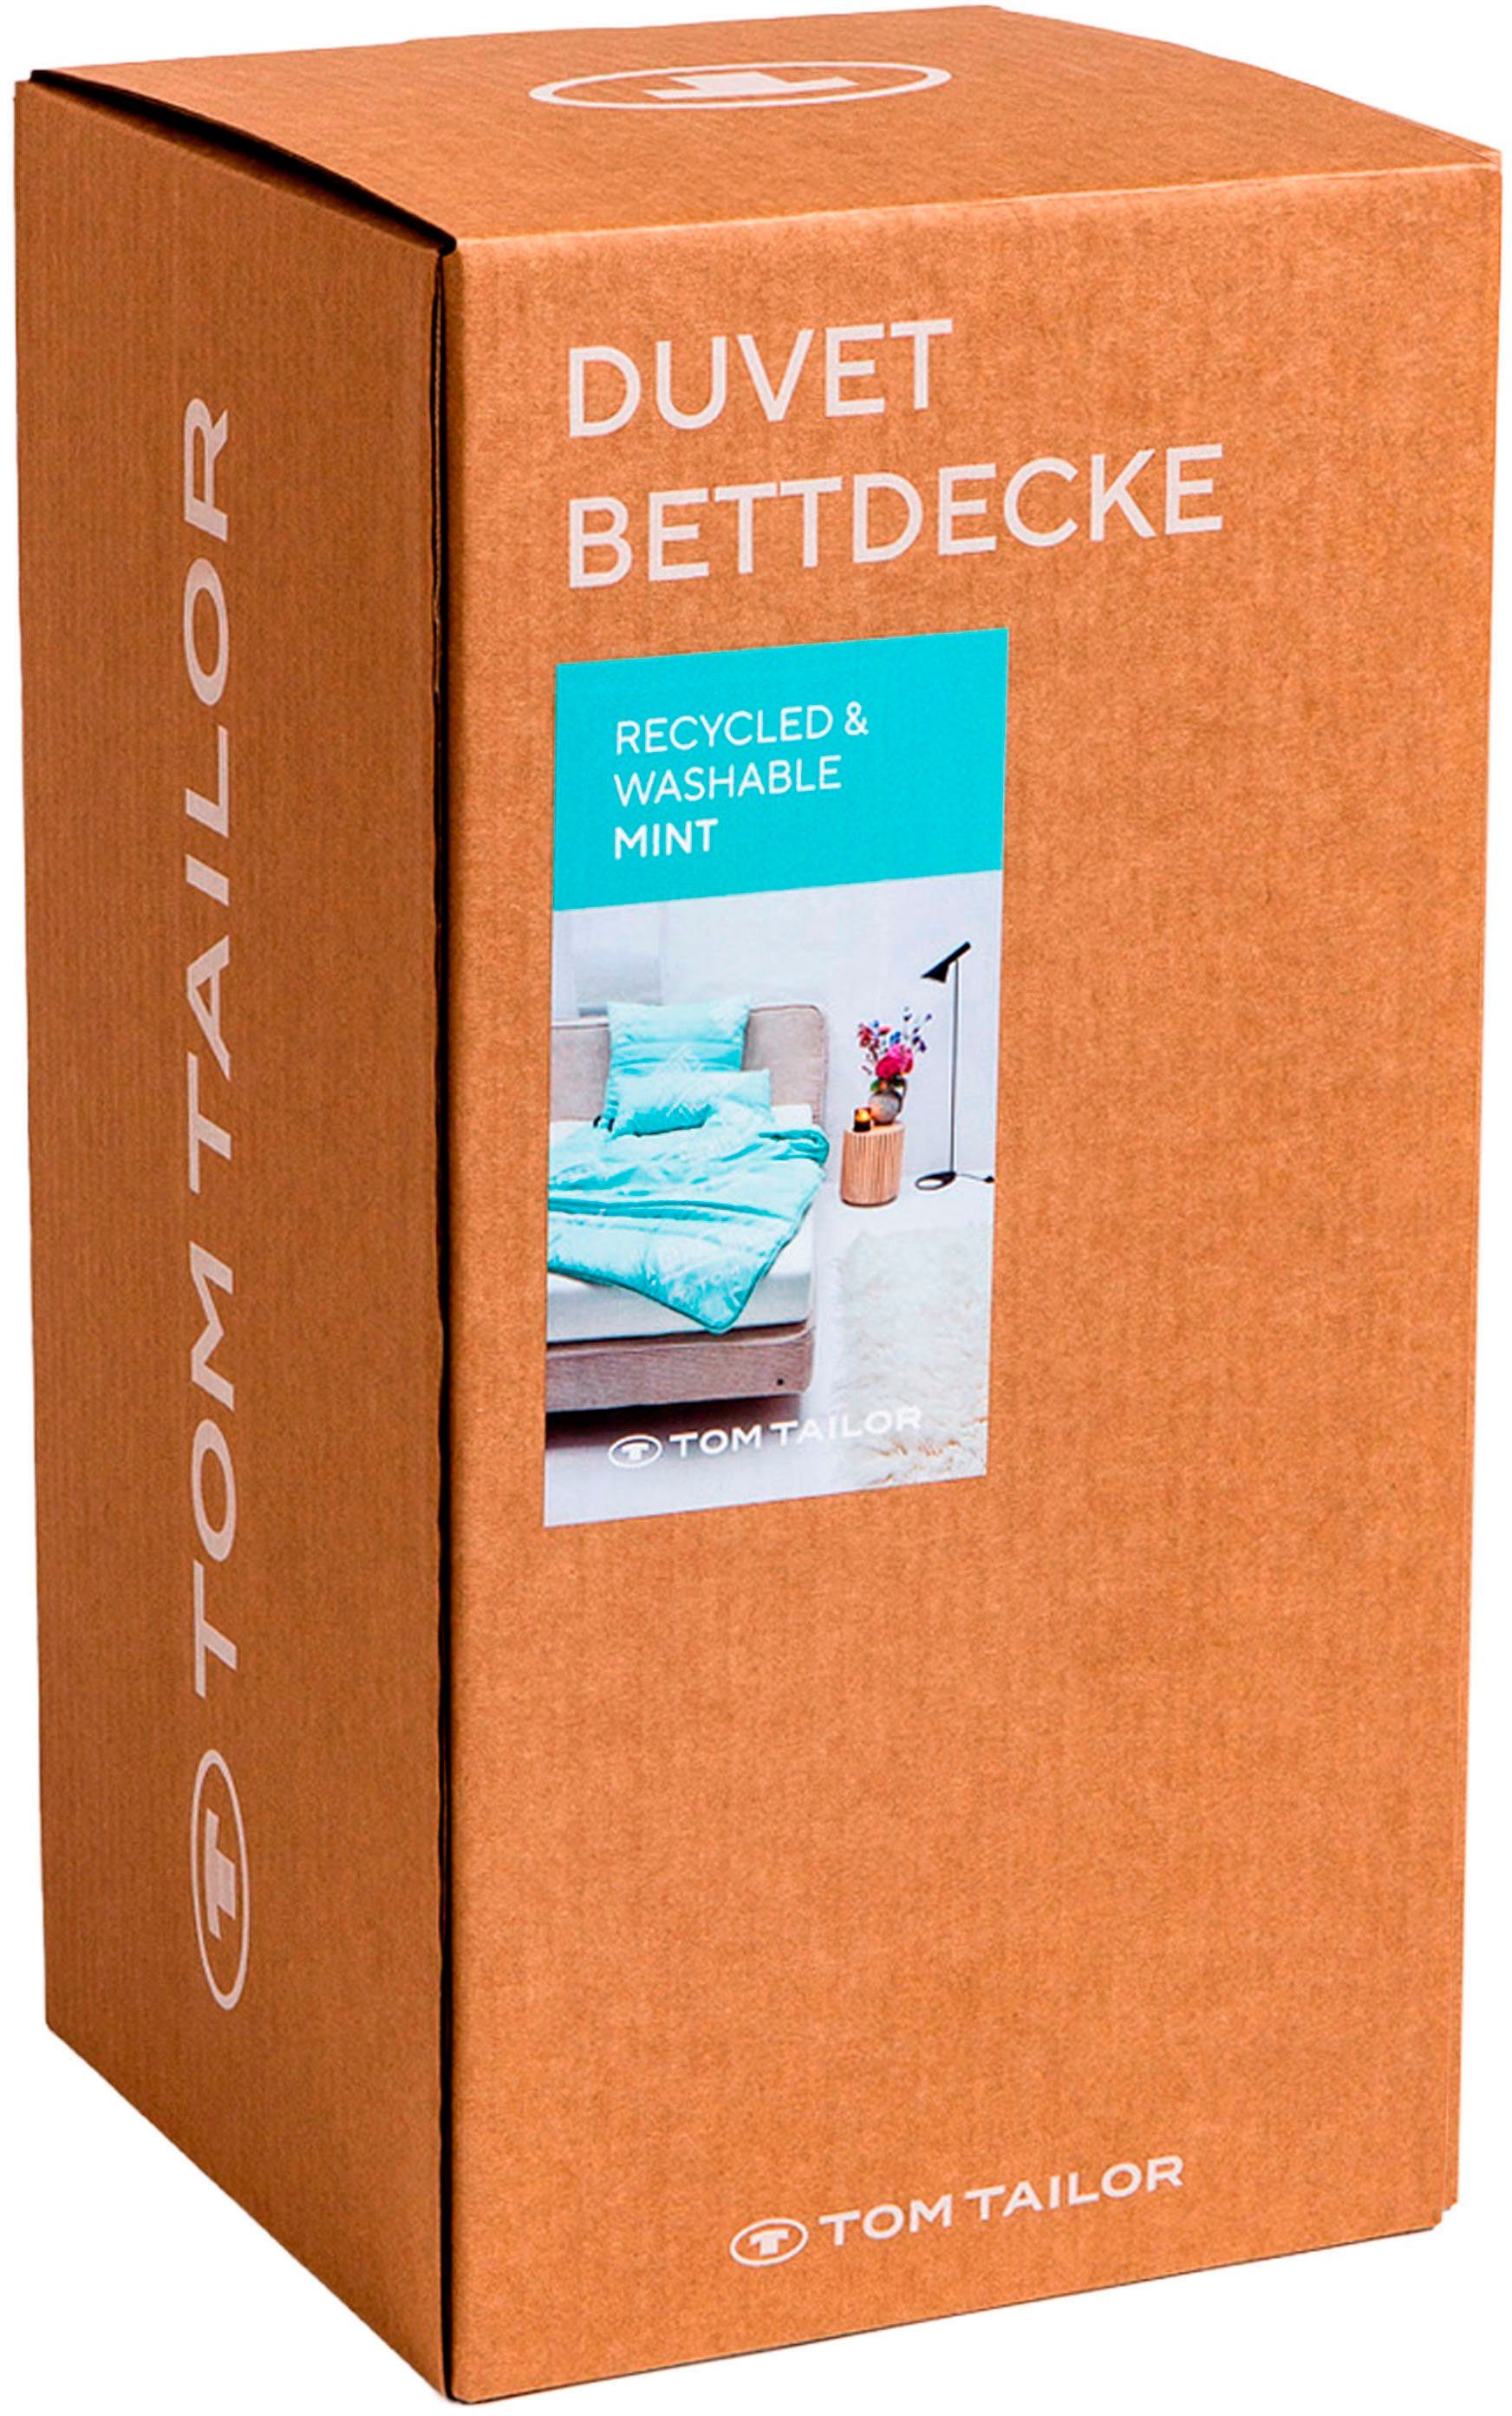 of Bettdecke TOM TAILOR Home mint Tom Tailor Colors, HOME Microfaserbettdecke,